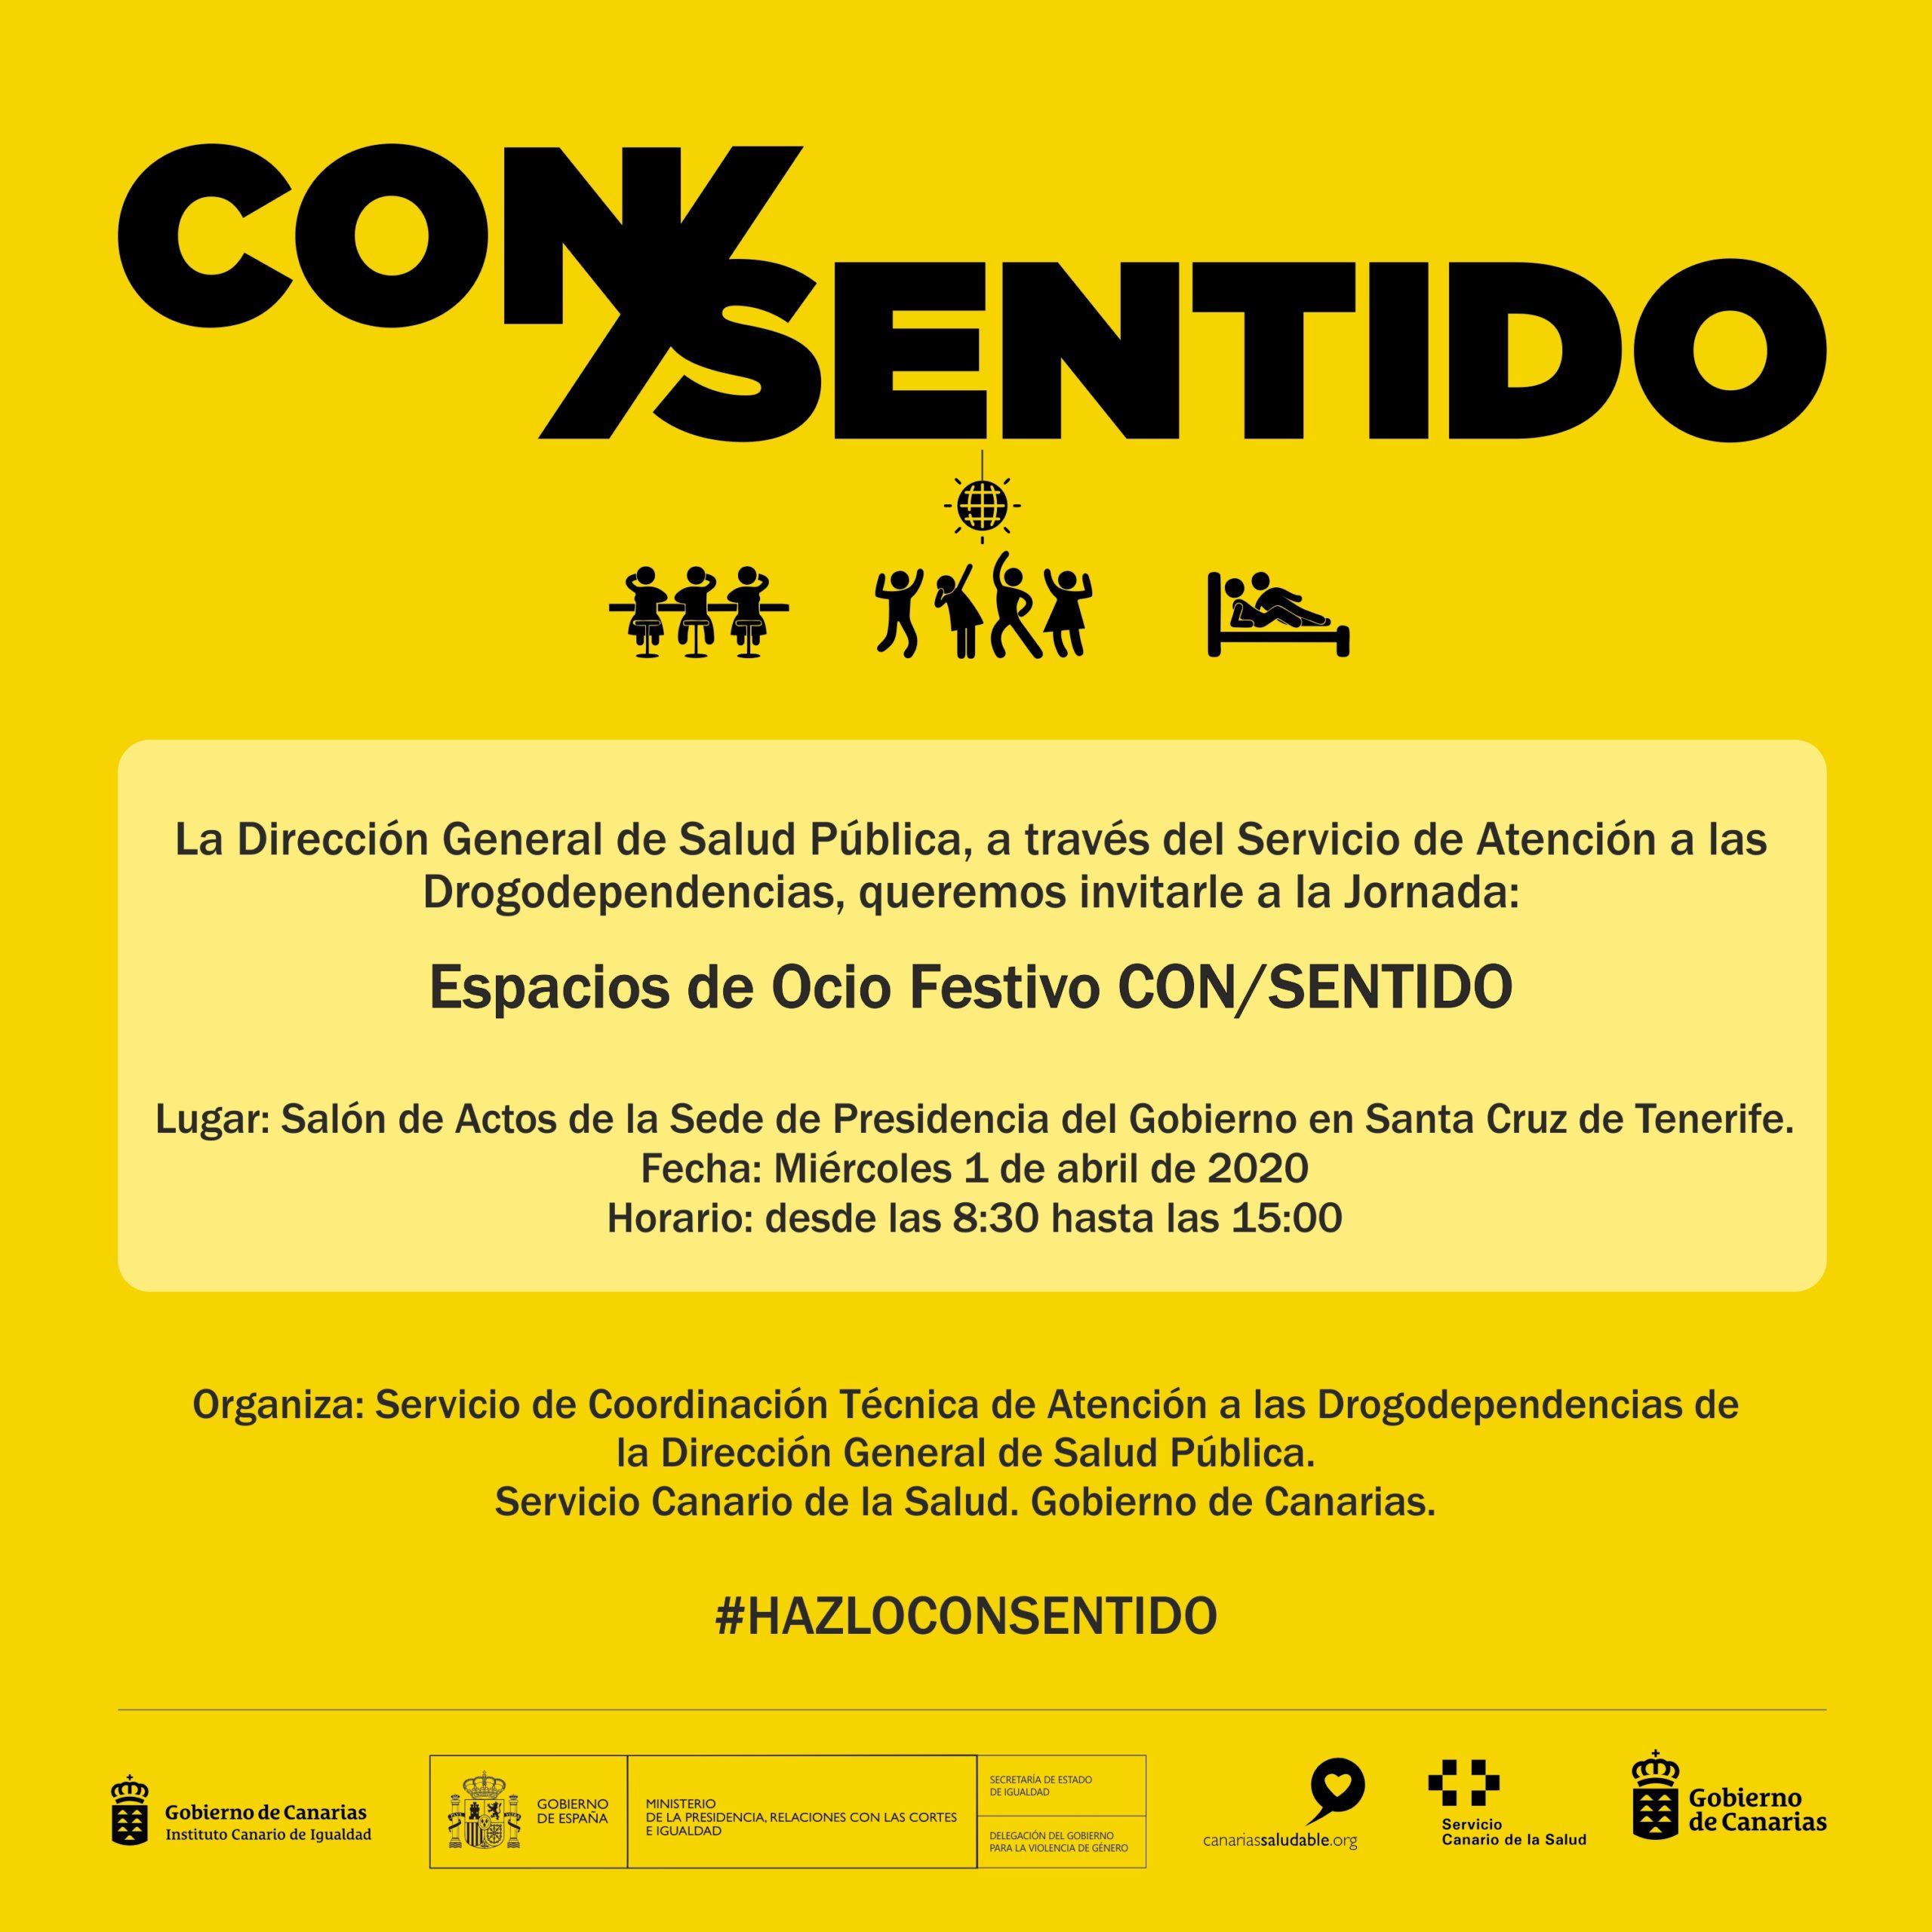 Jornada "Espacios de Ocio Festivo CON/SENTIDO" - Tenerife